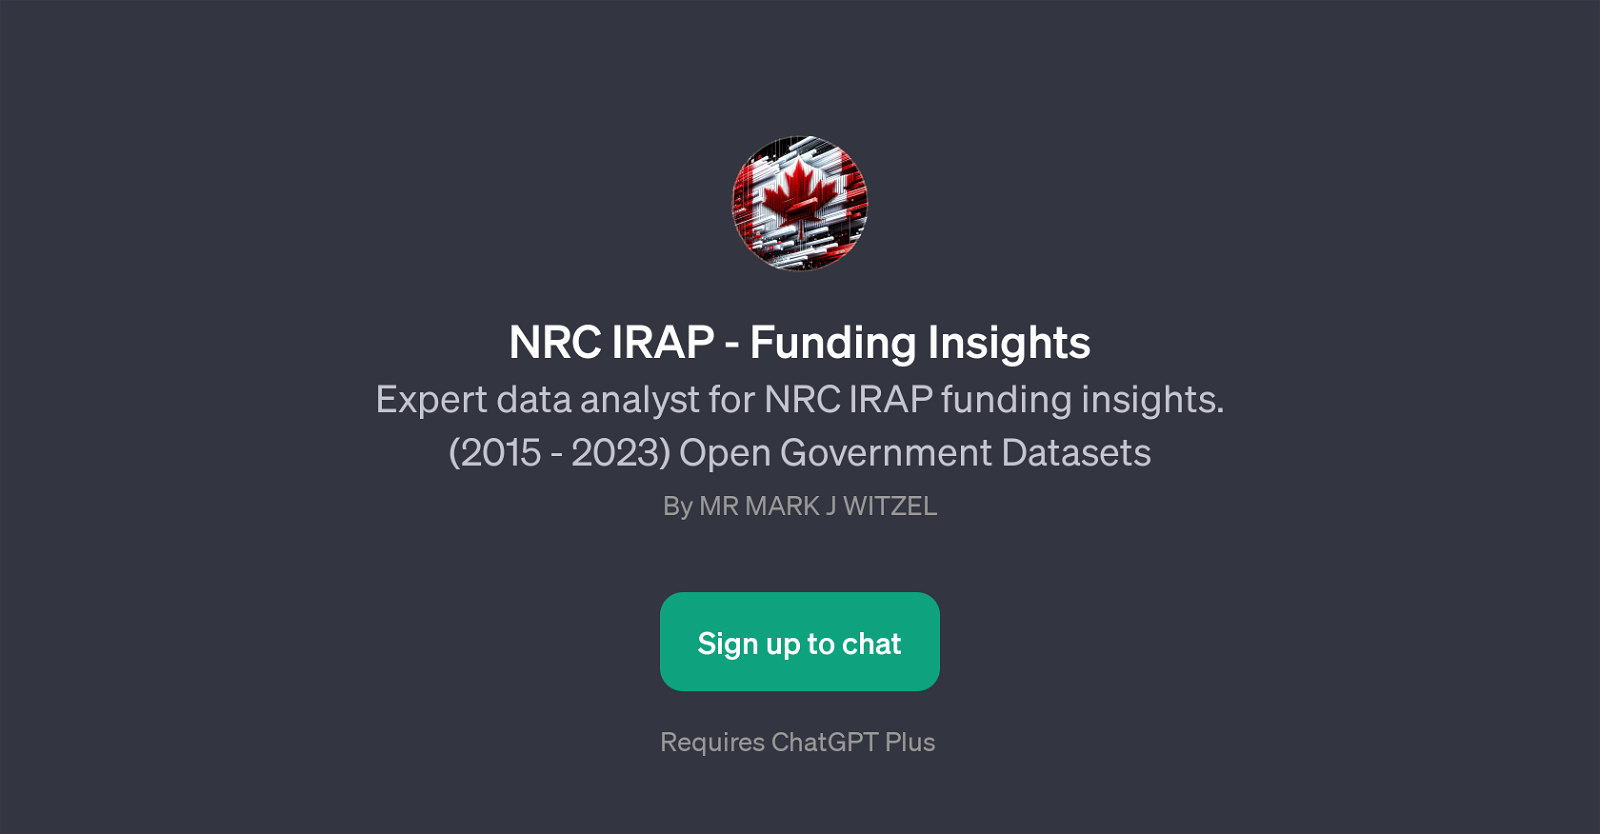 NRC IRAP - Funding Insights website